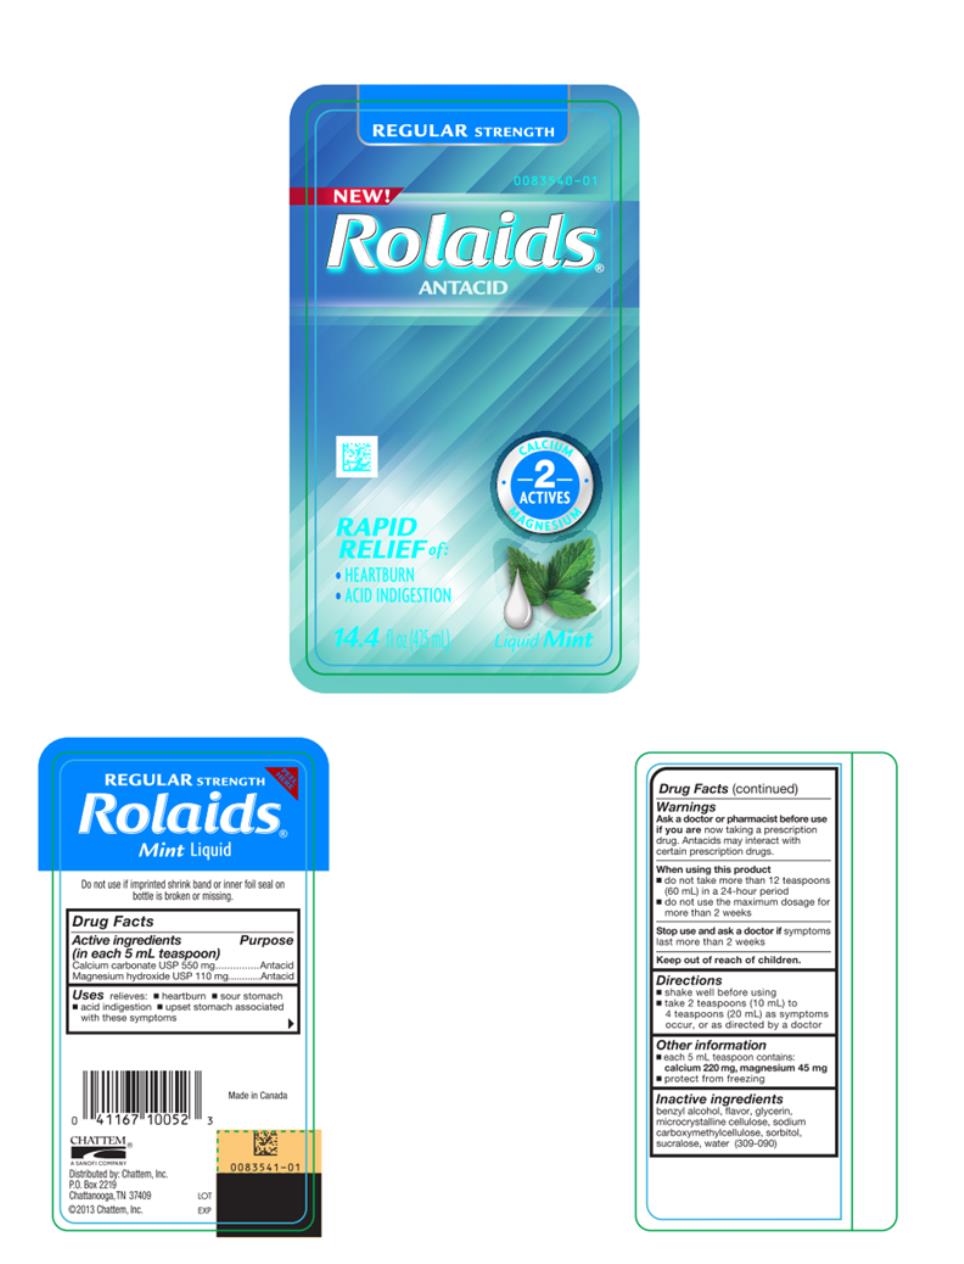 REGULAR STRENGTH
NEW!
Rolaids®
ANTACID
RAPID RELIEF of:
● HEARTBURN
● ACID INDIGESTION
14.4 fl oz (425 mL)
Liquid Mint 
